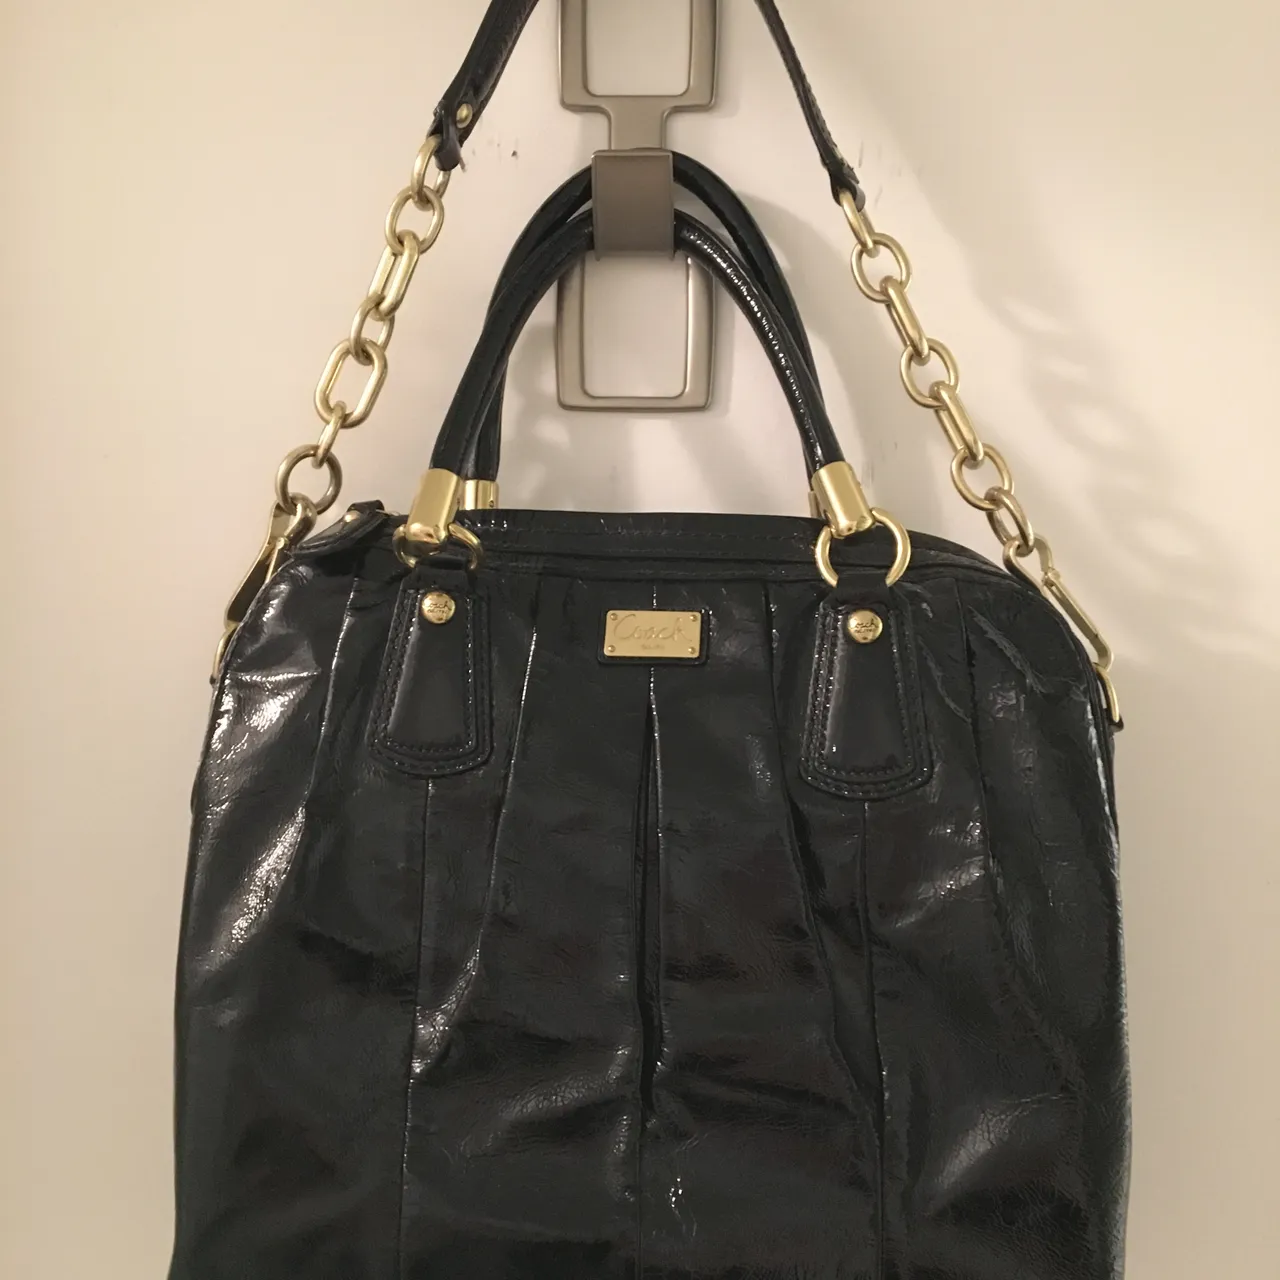 Authentic Black Patent Coach Bag with Dust Bag photo 1